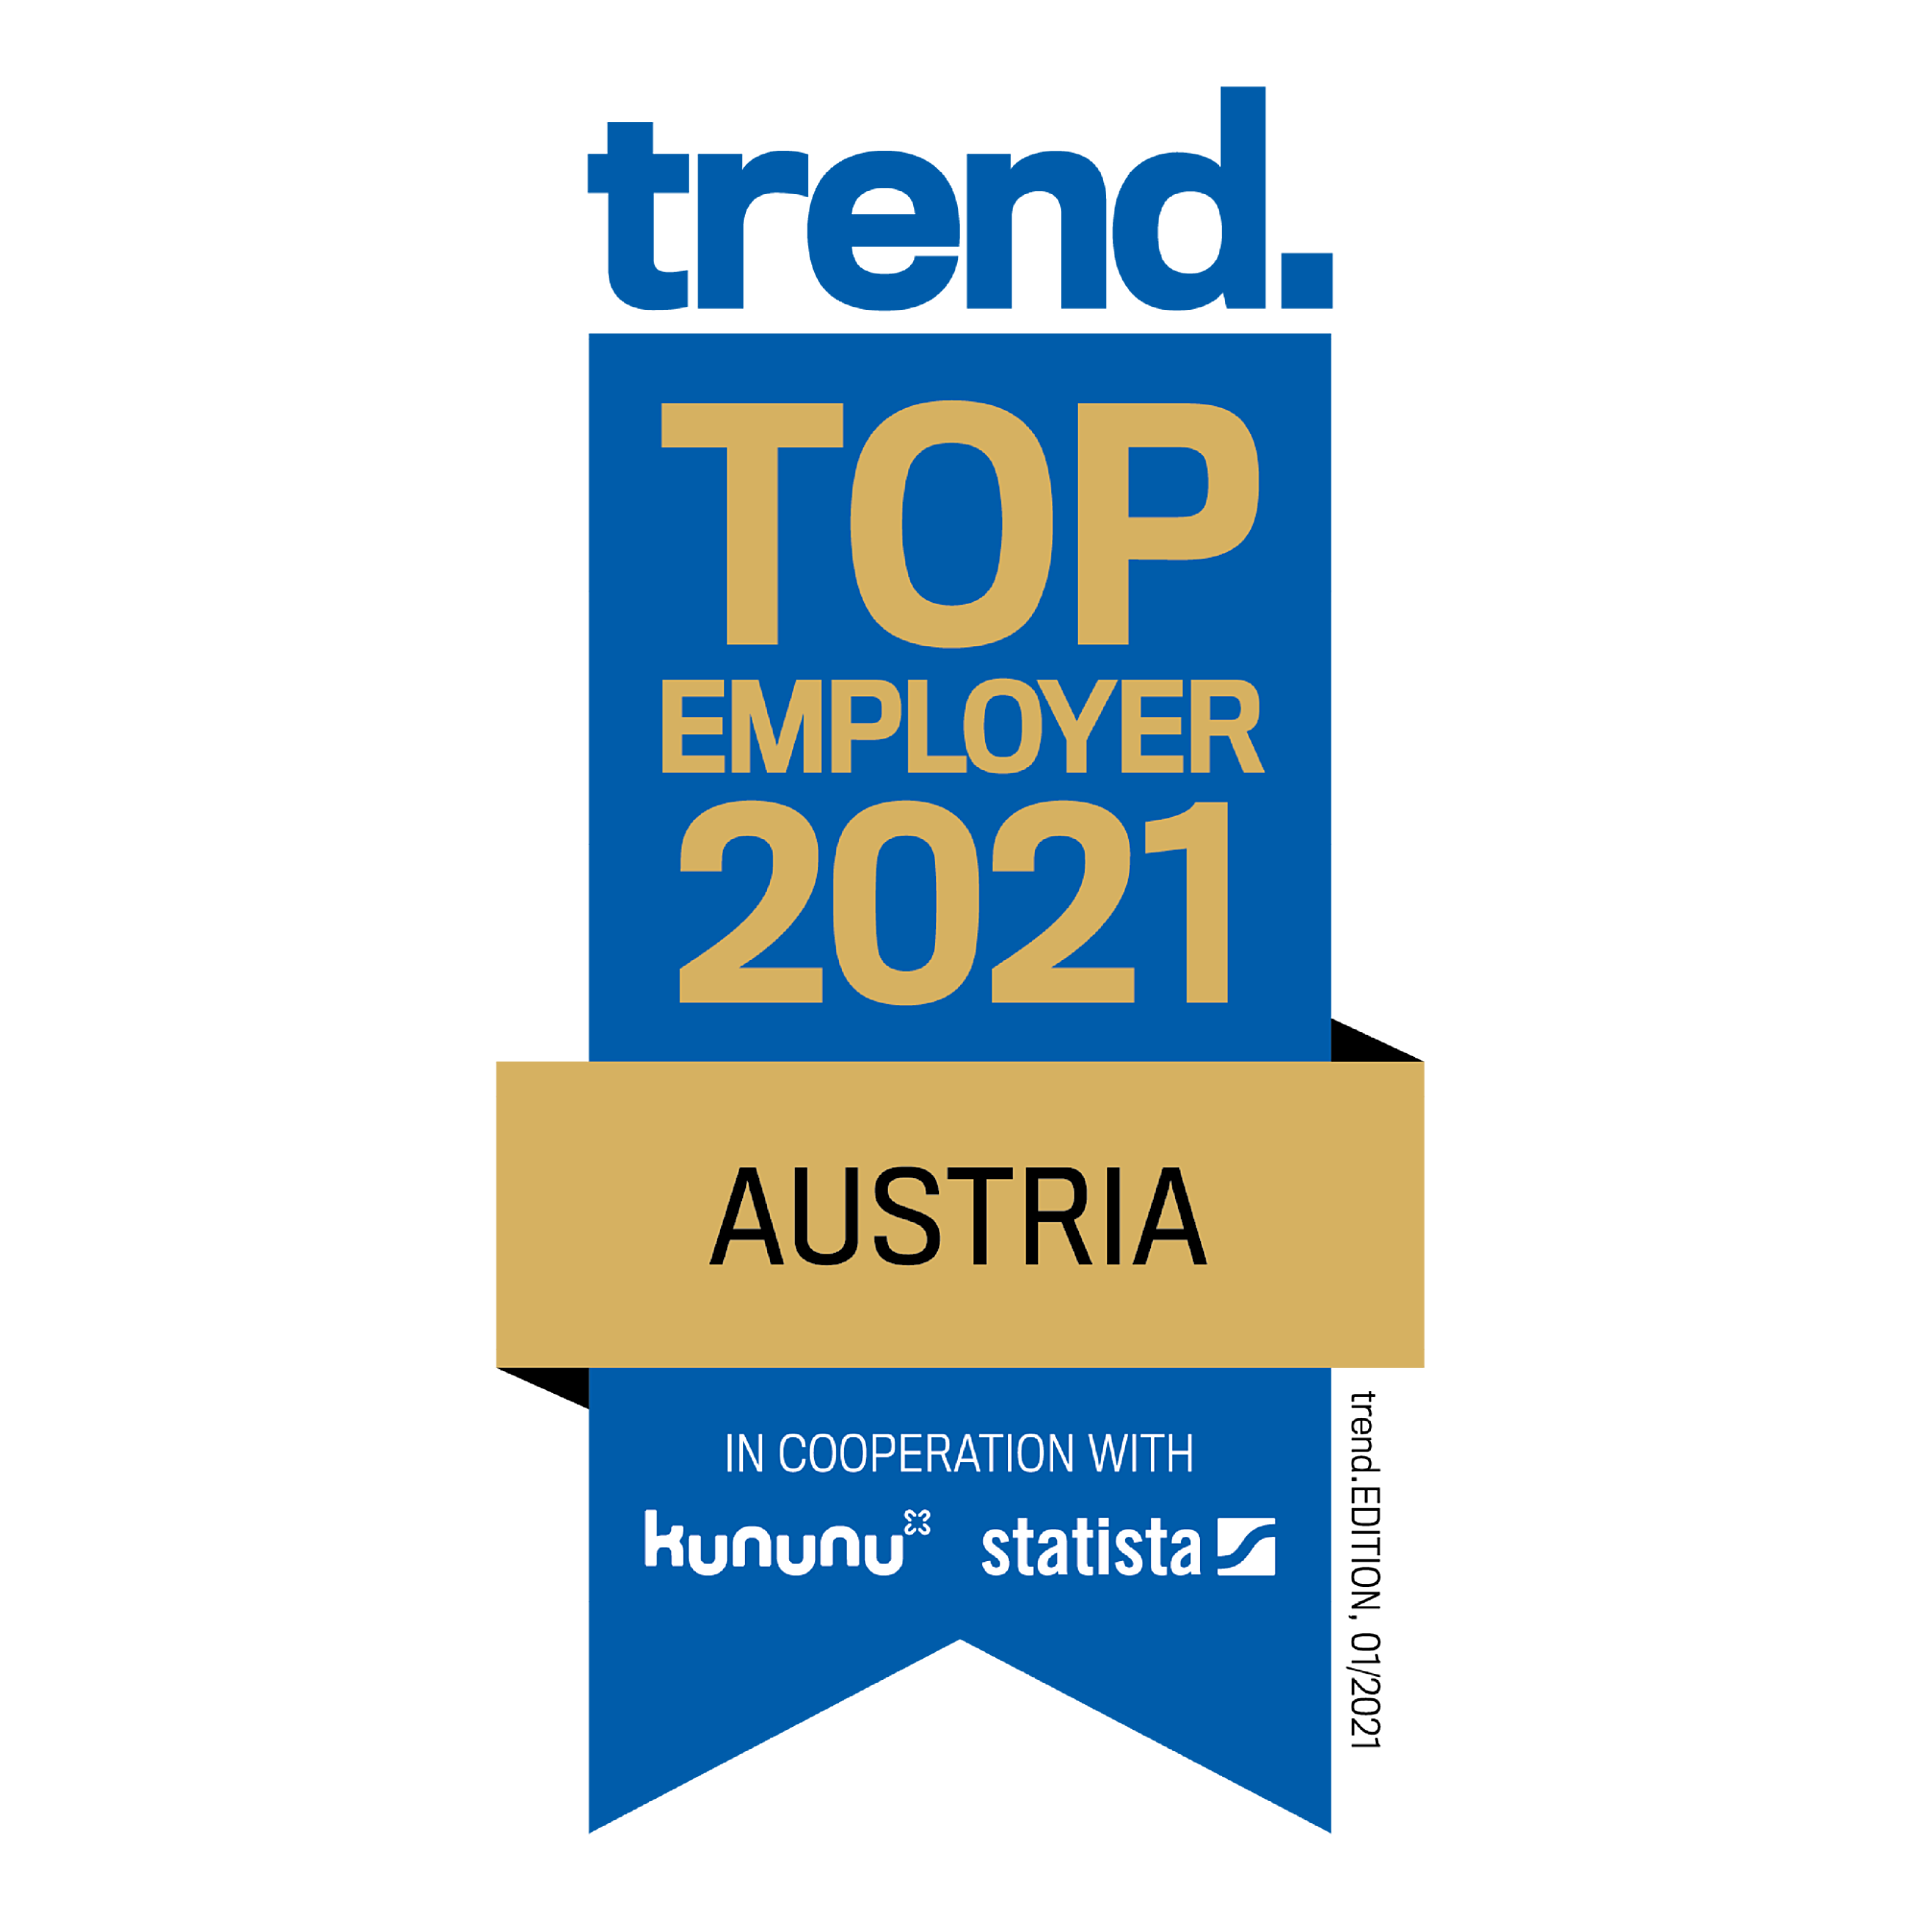 Top IT Employer in Austria